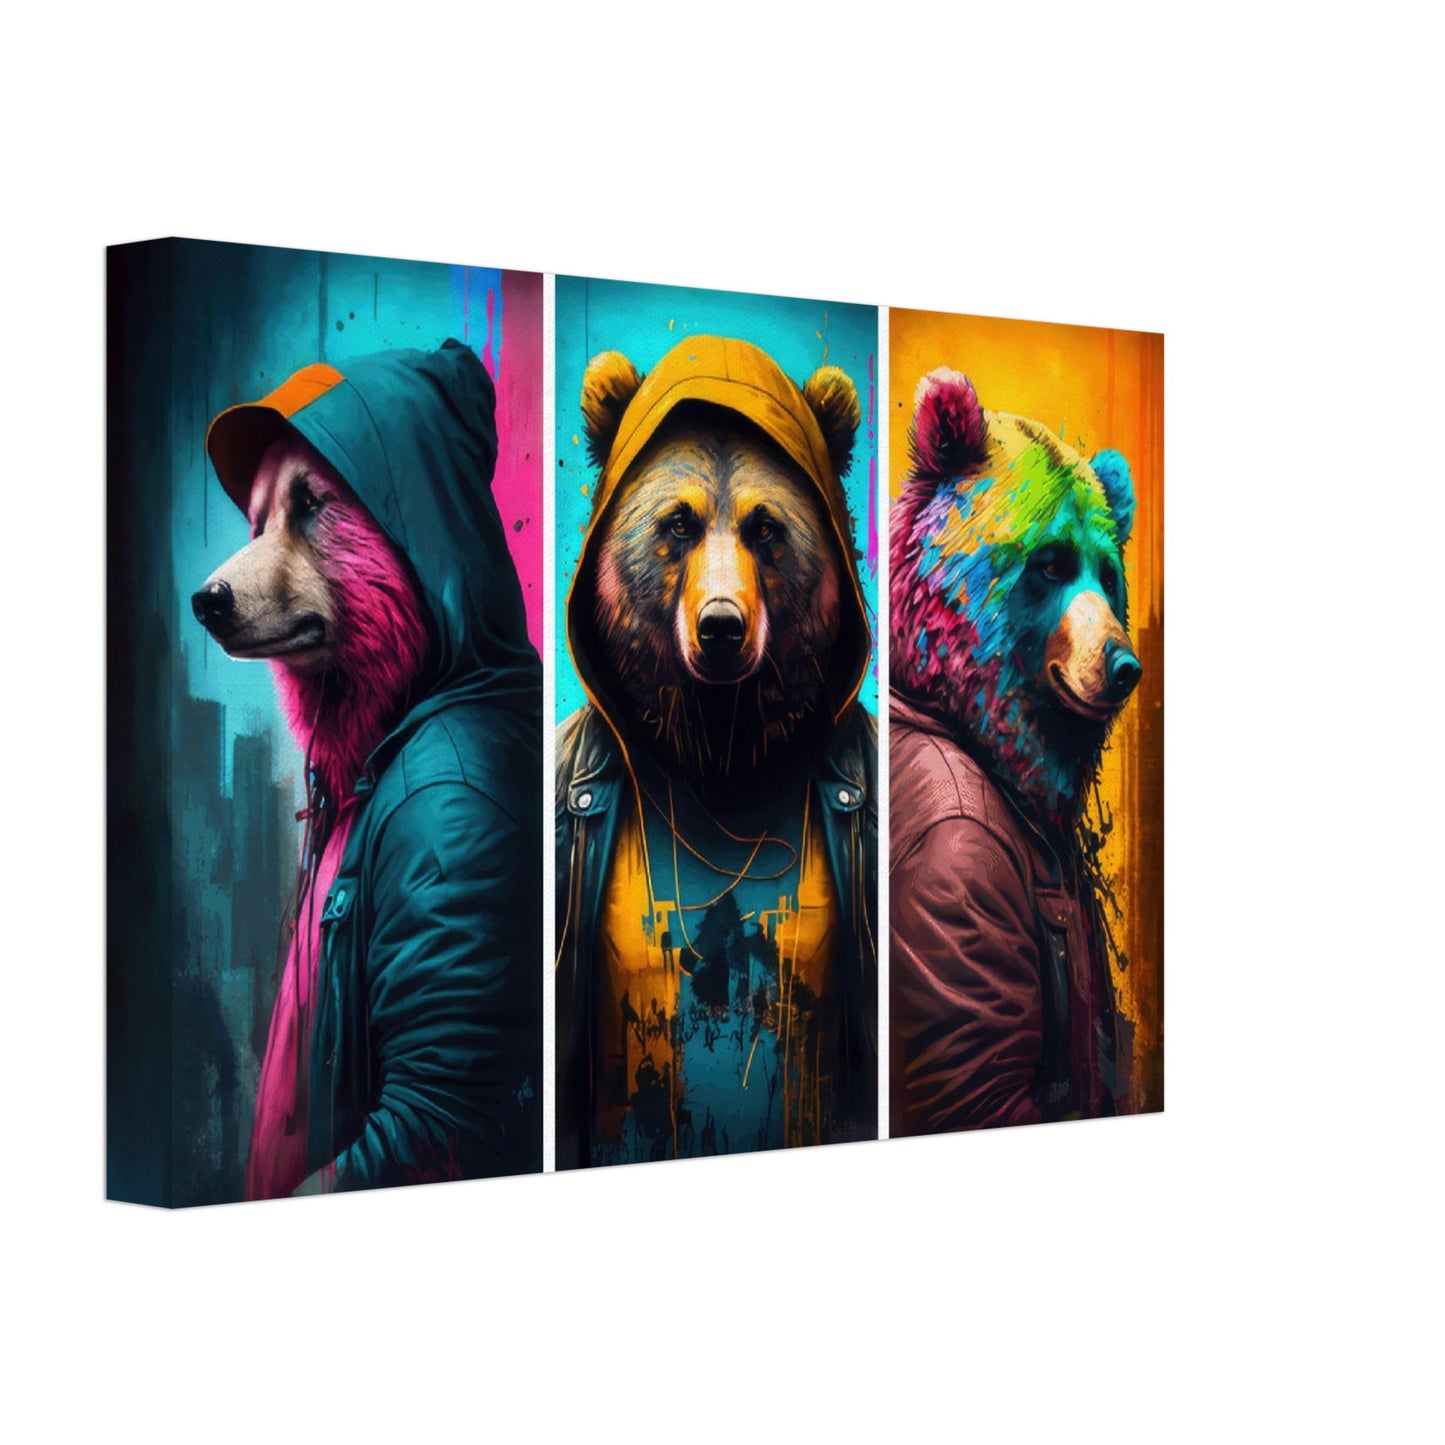 Beary Best - Bären Wandbild - Crazy Wildlife Leinwand ColorWorld im Querformat - Coole Tiere & Animals Kunstdruck